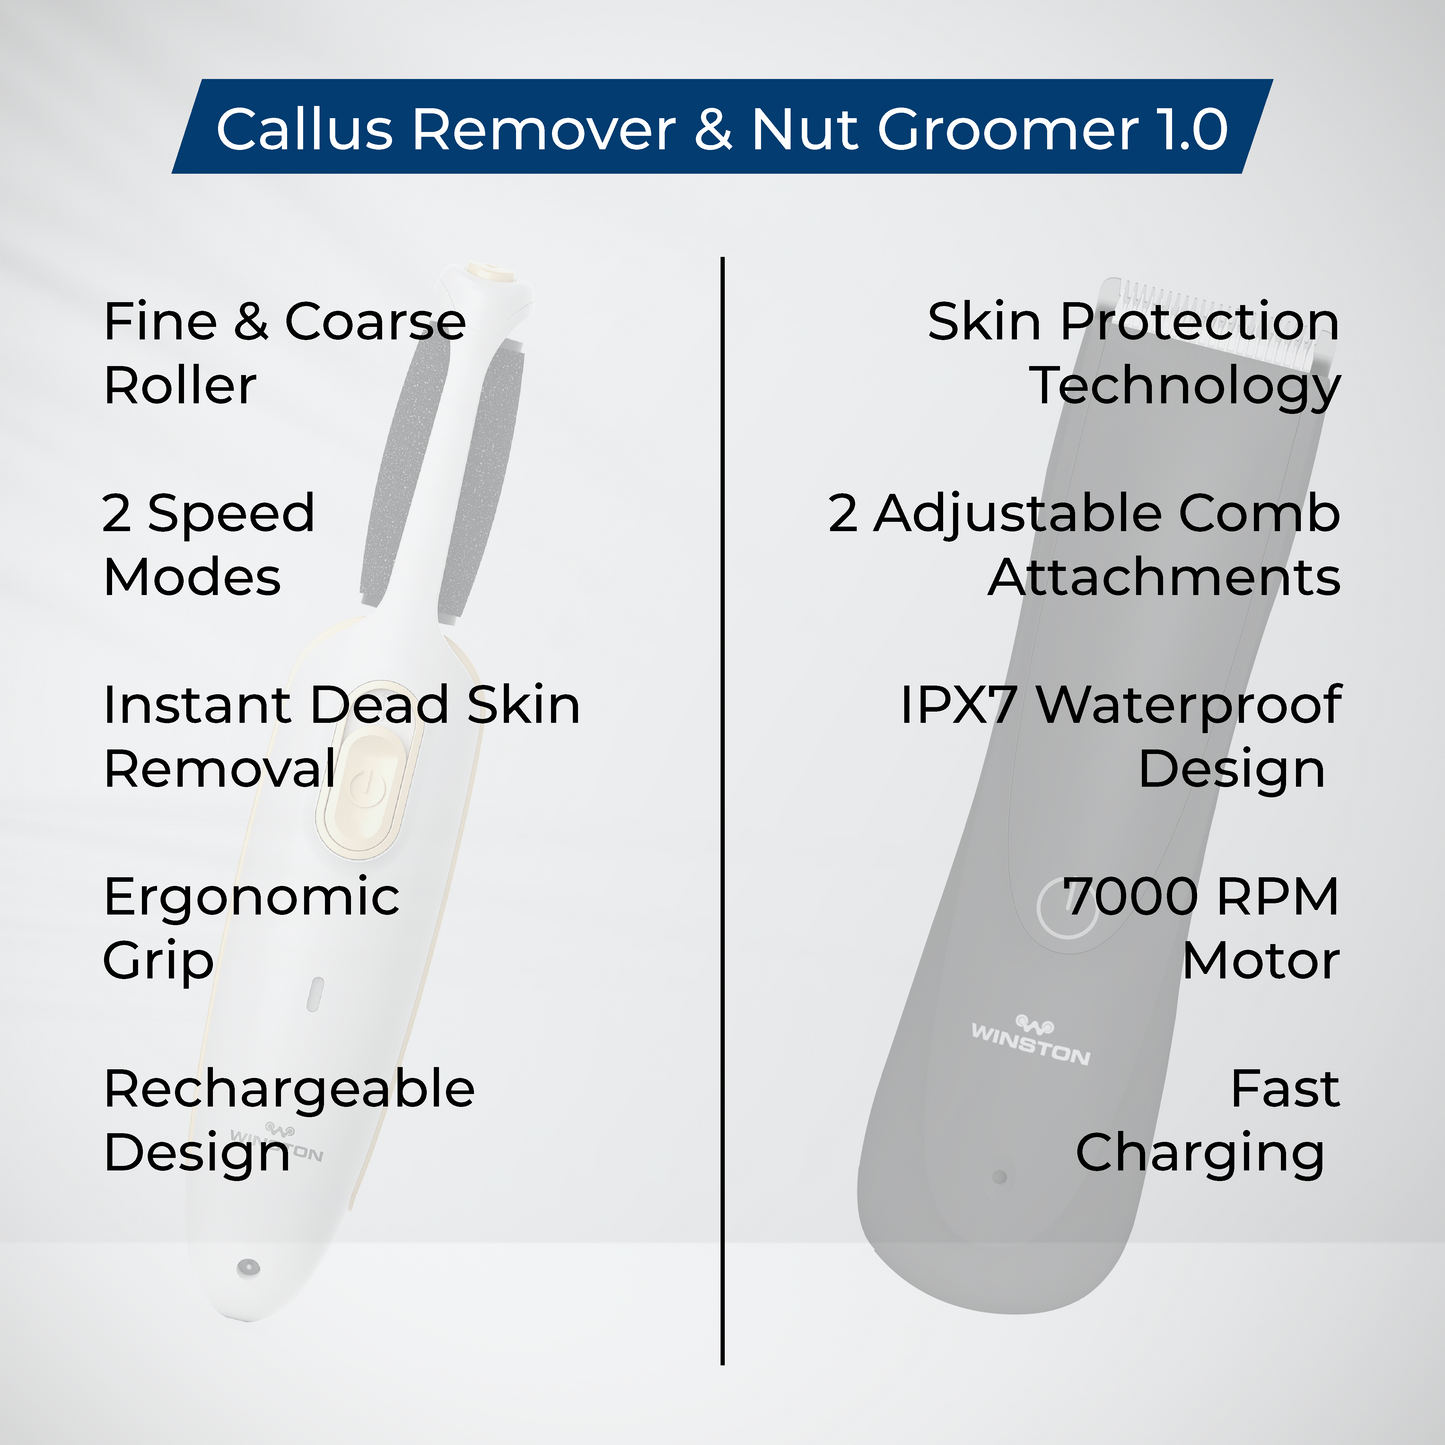 Callus & Nut Groomer 1.0 Combo